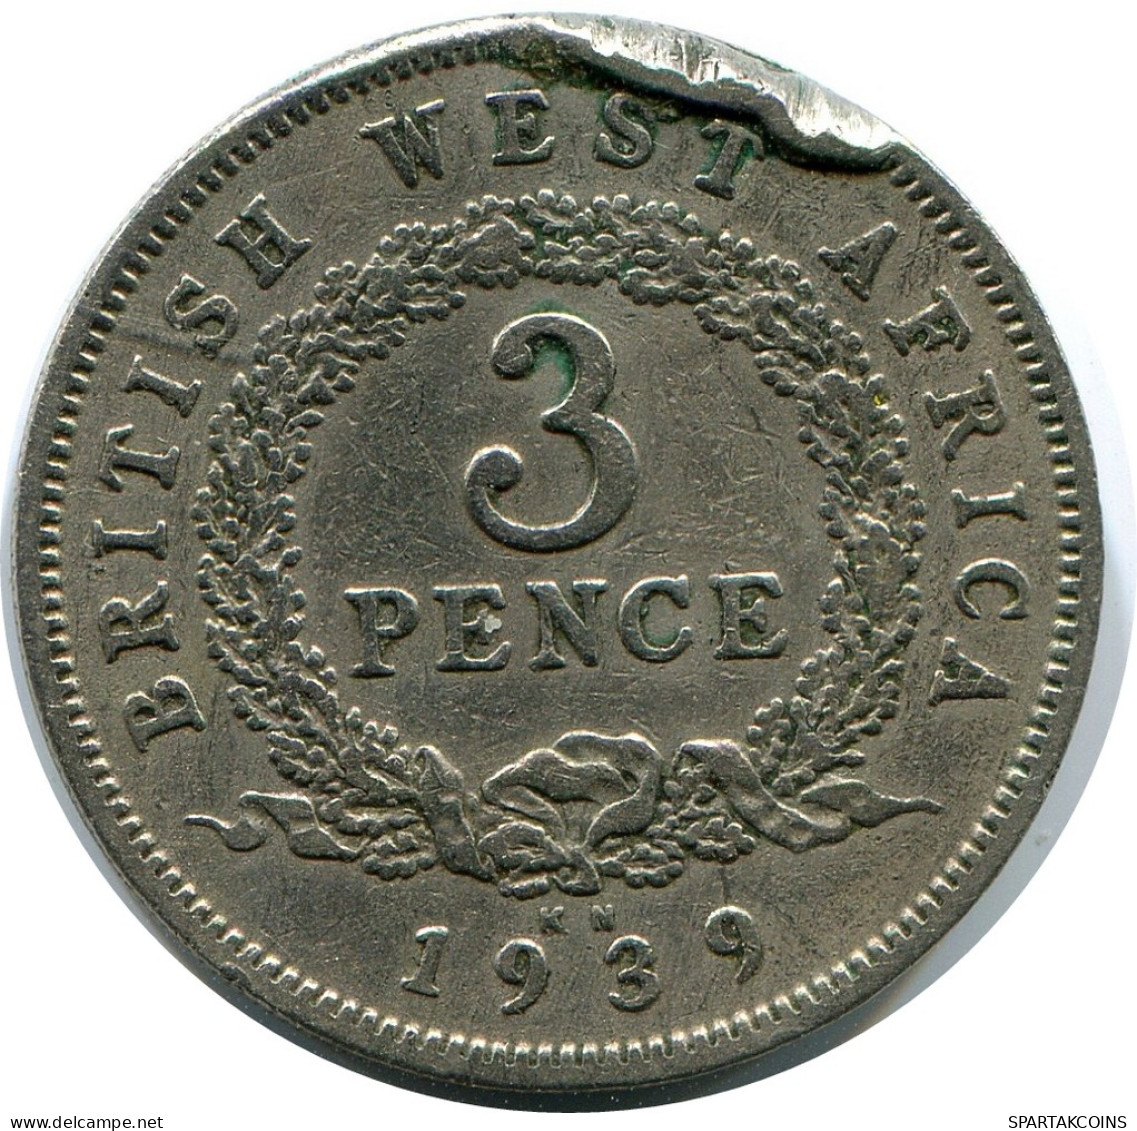 1 SHILLING 1939 ÁFRICA ORIENTAL EAST AFRICA Moneda #AP876.E - Colonie Britannique